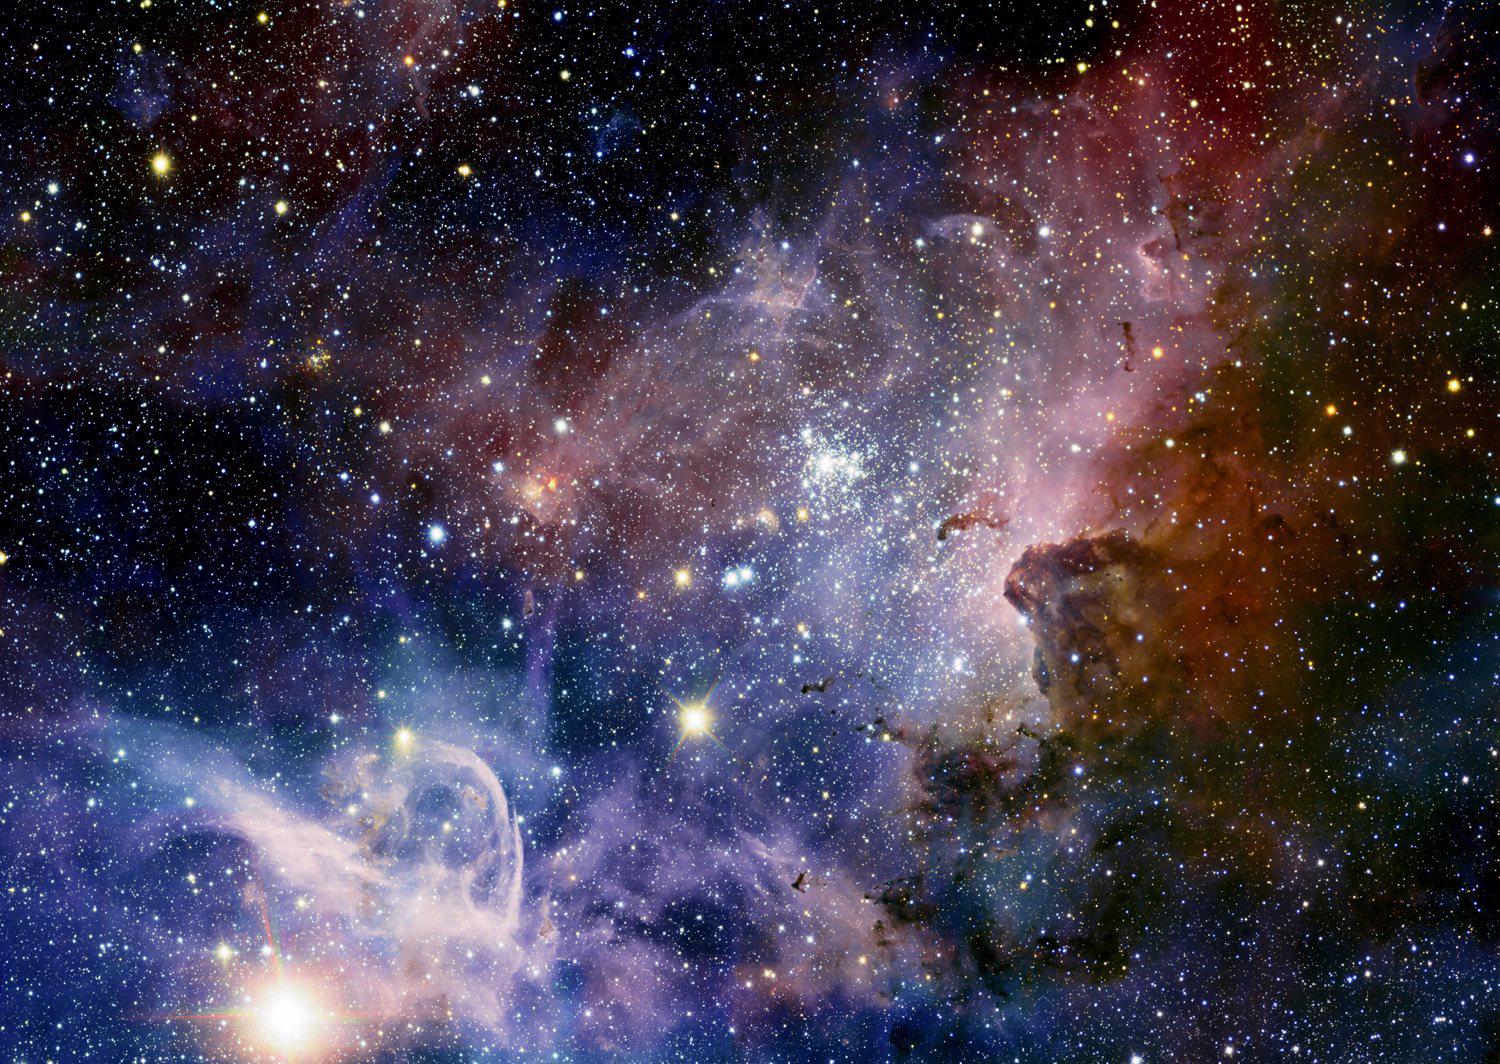 The Carina Nebula 1000